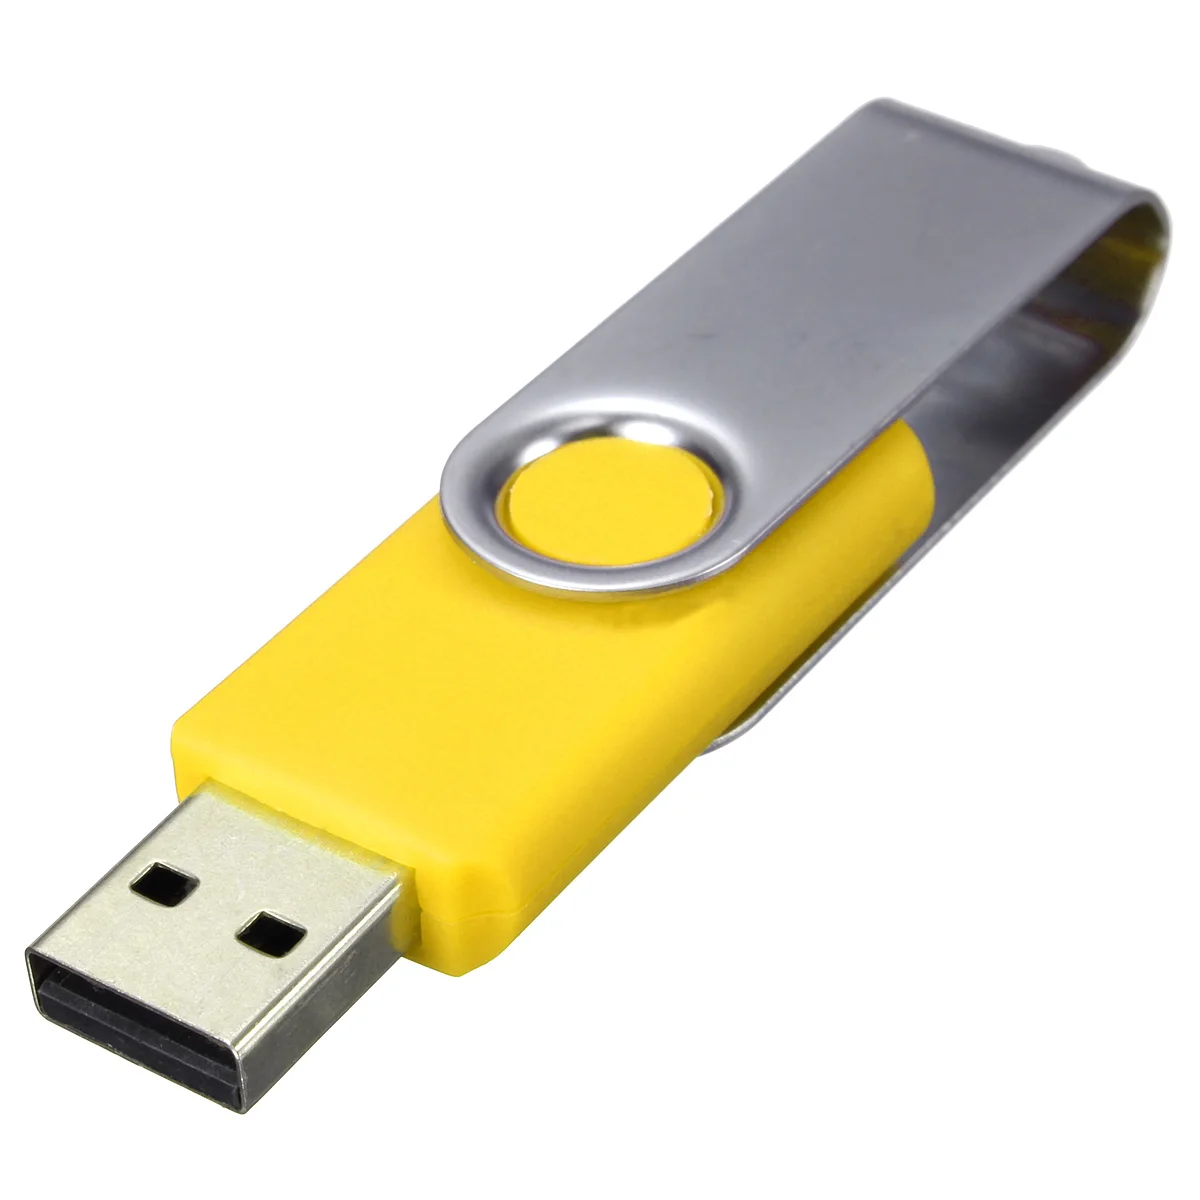 USB флеш-накопитель 64 Мб USB 2,0, флешка для смартфона, планшета, ПК, поворотная USB флеш-карта памяти, Подарочная флешка - Цвет: Цвет: желтый